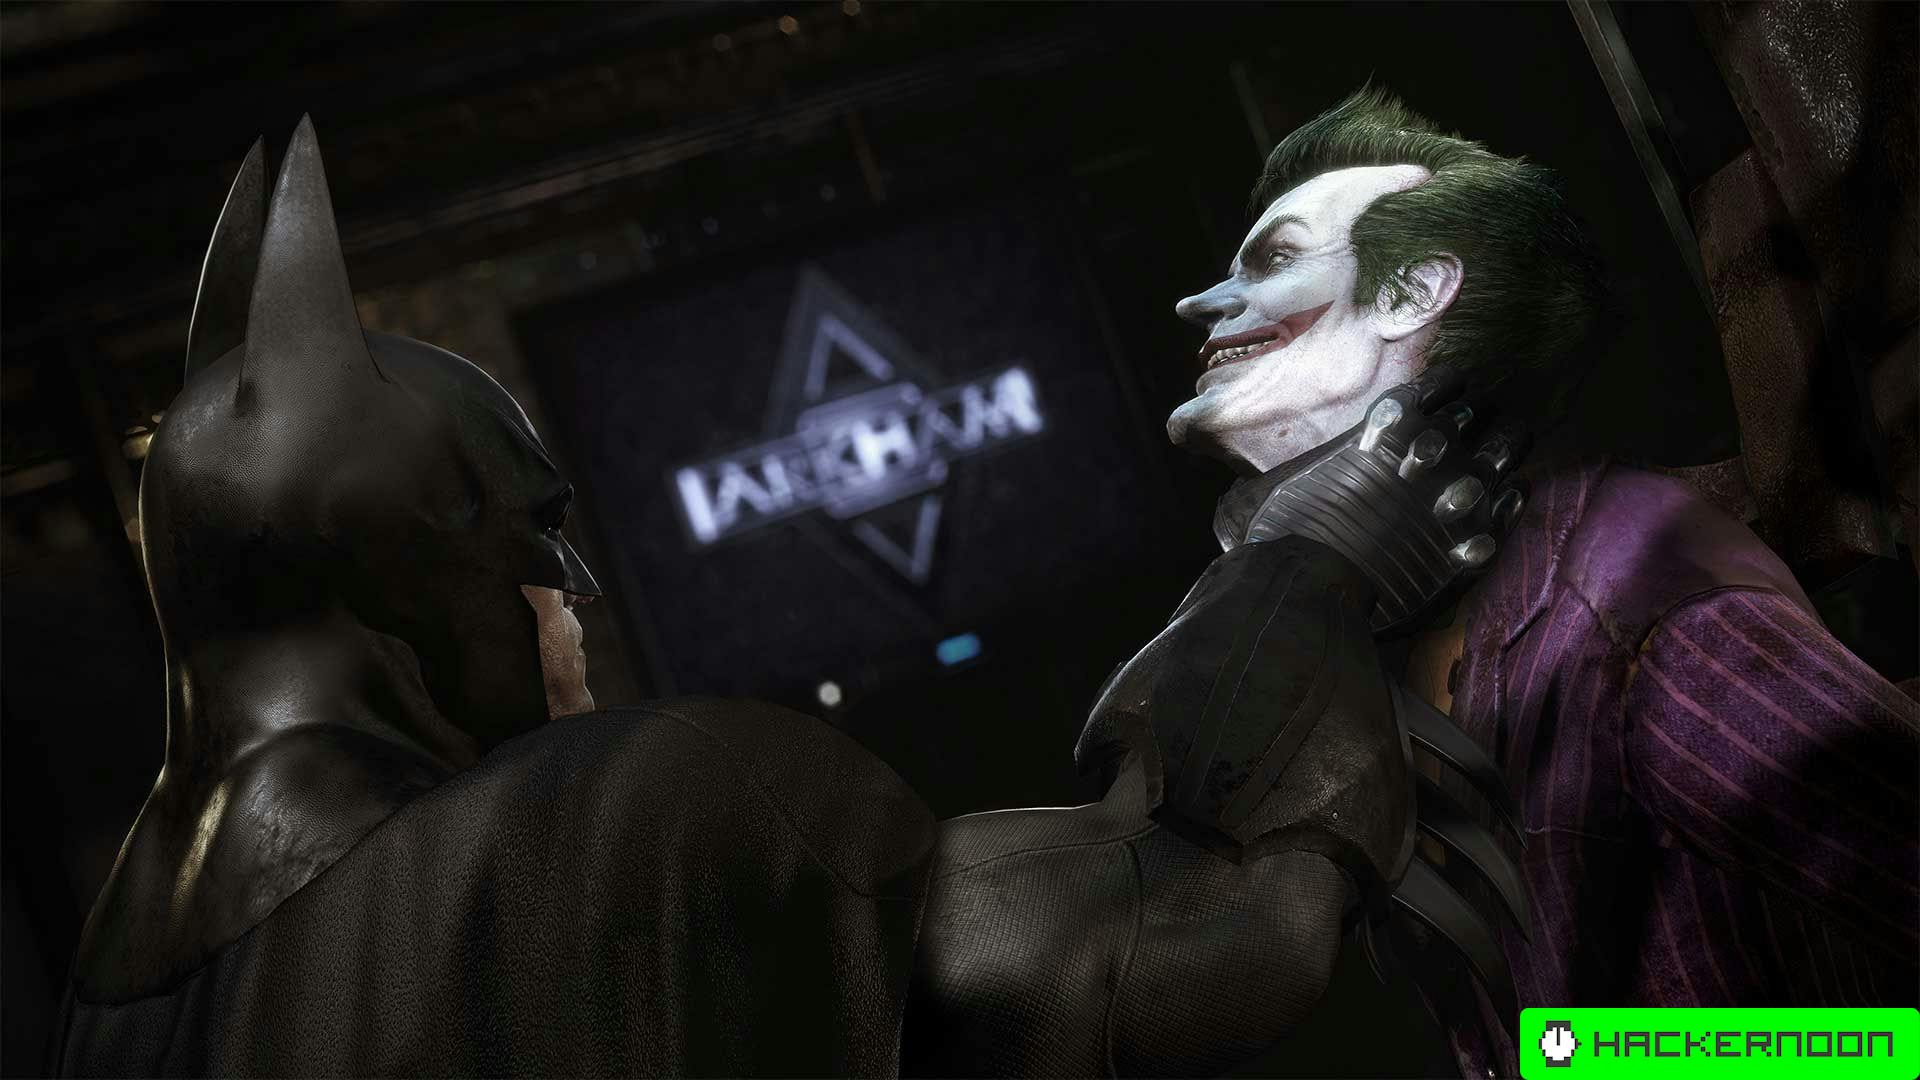 The Batman: Arkham Games Ranked by Sales | HackerNoon